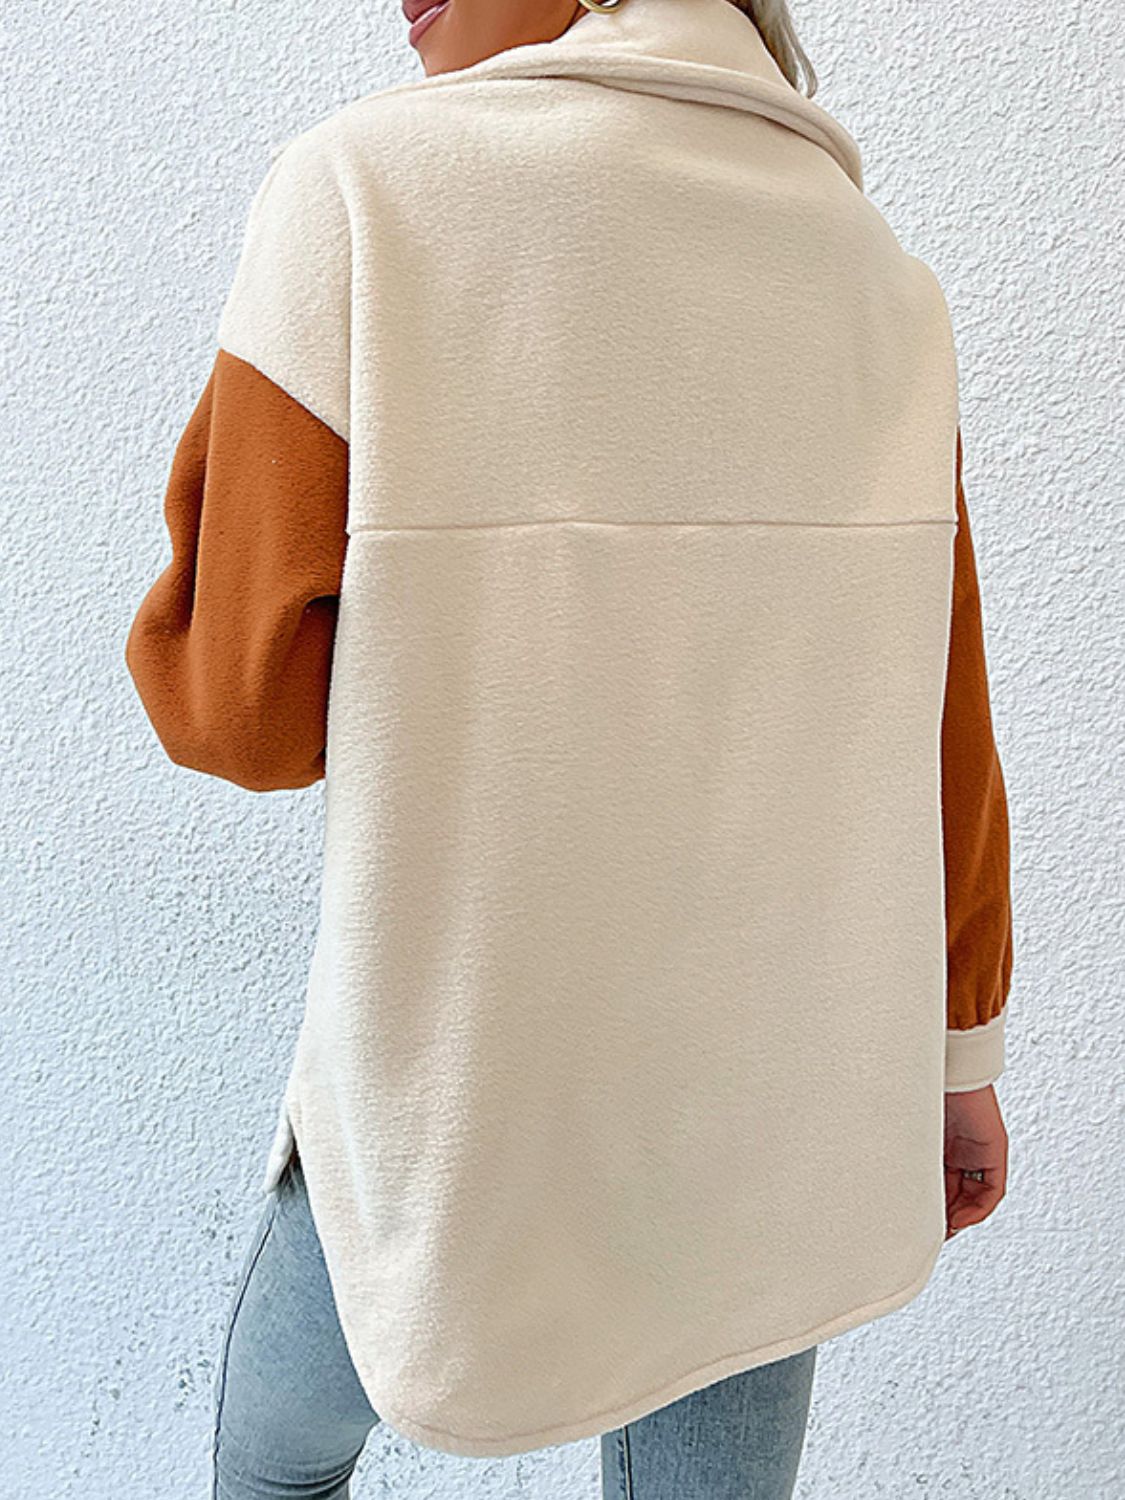 Contrast Button-Up Fleece Jacket  | KIKI COUTURE-Women's Clothing, Designer Fashions, Shoes, Bags